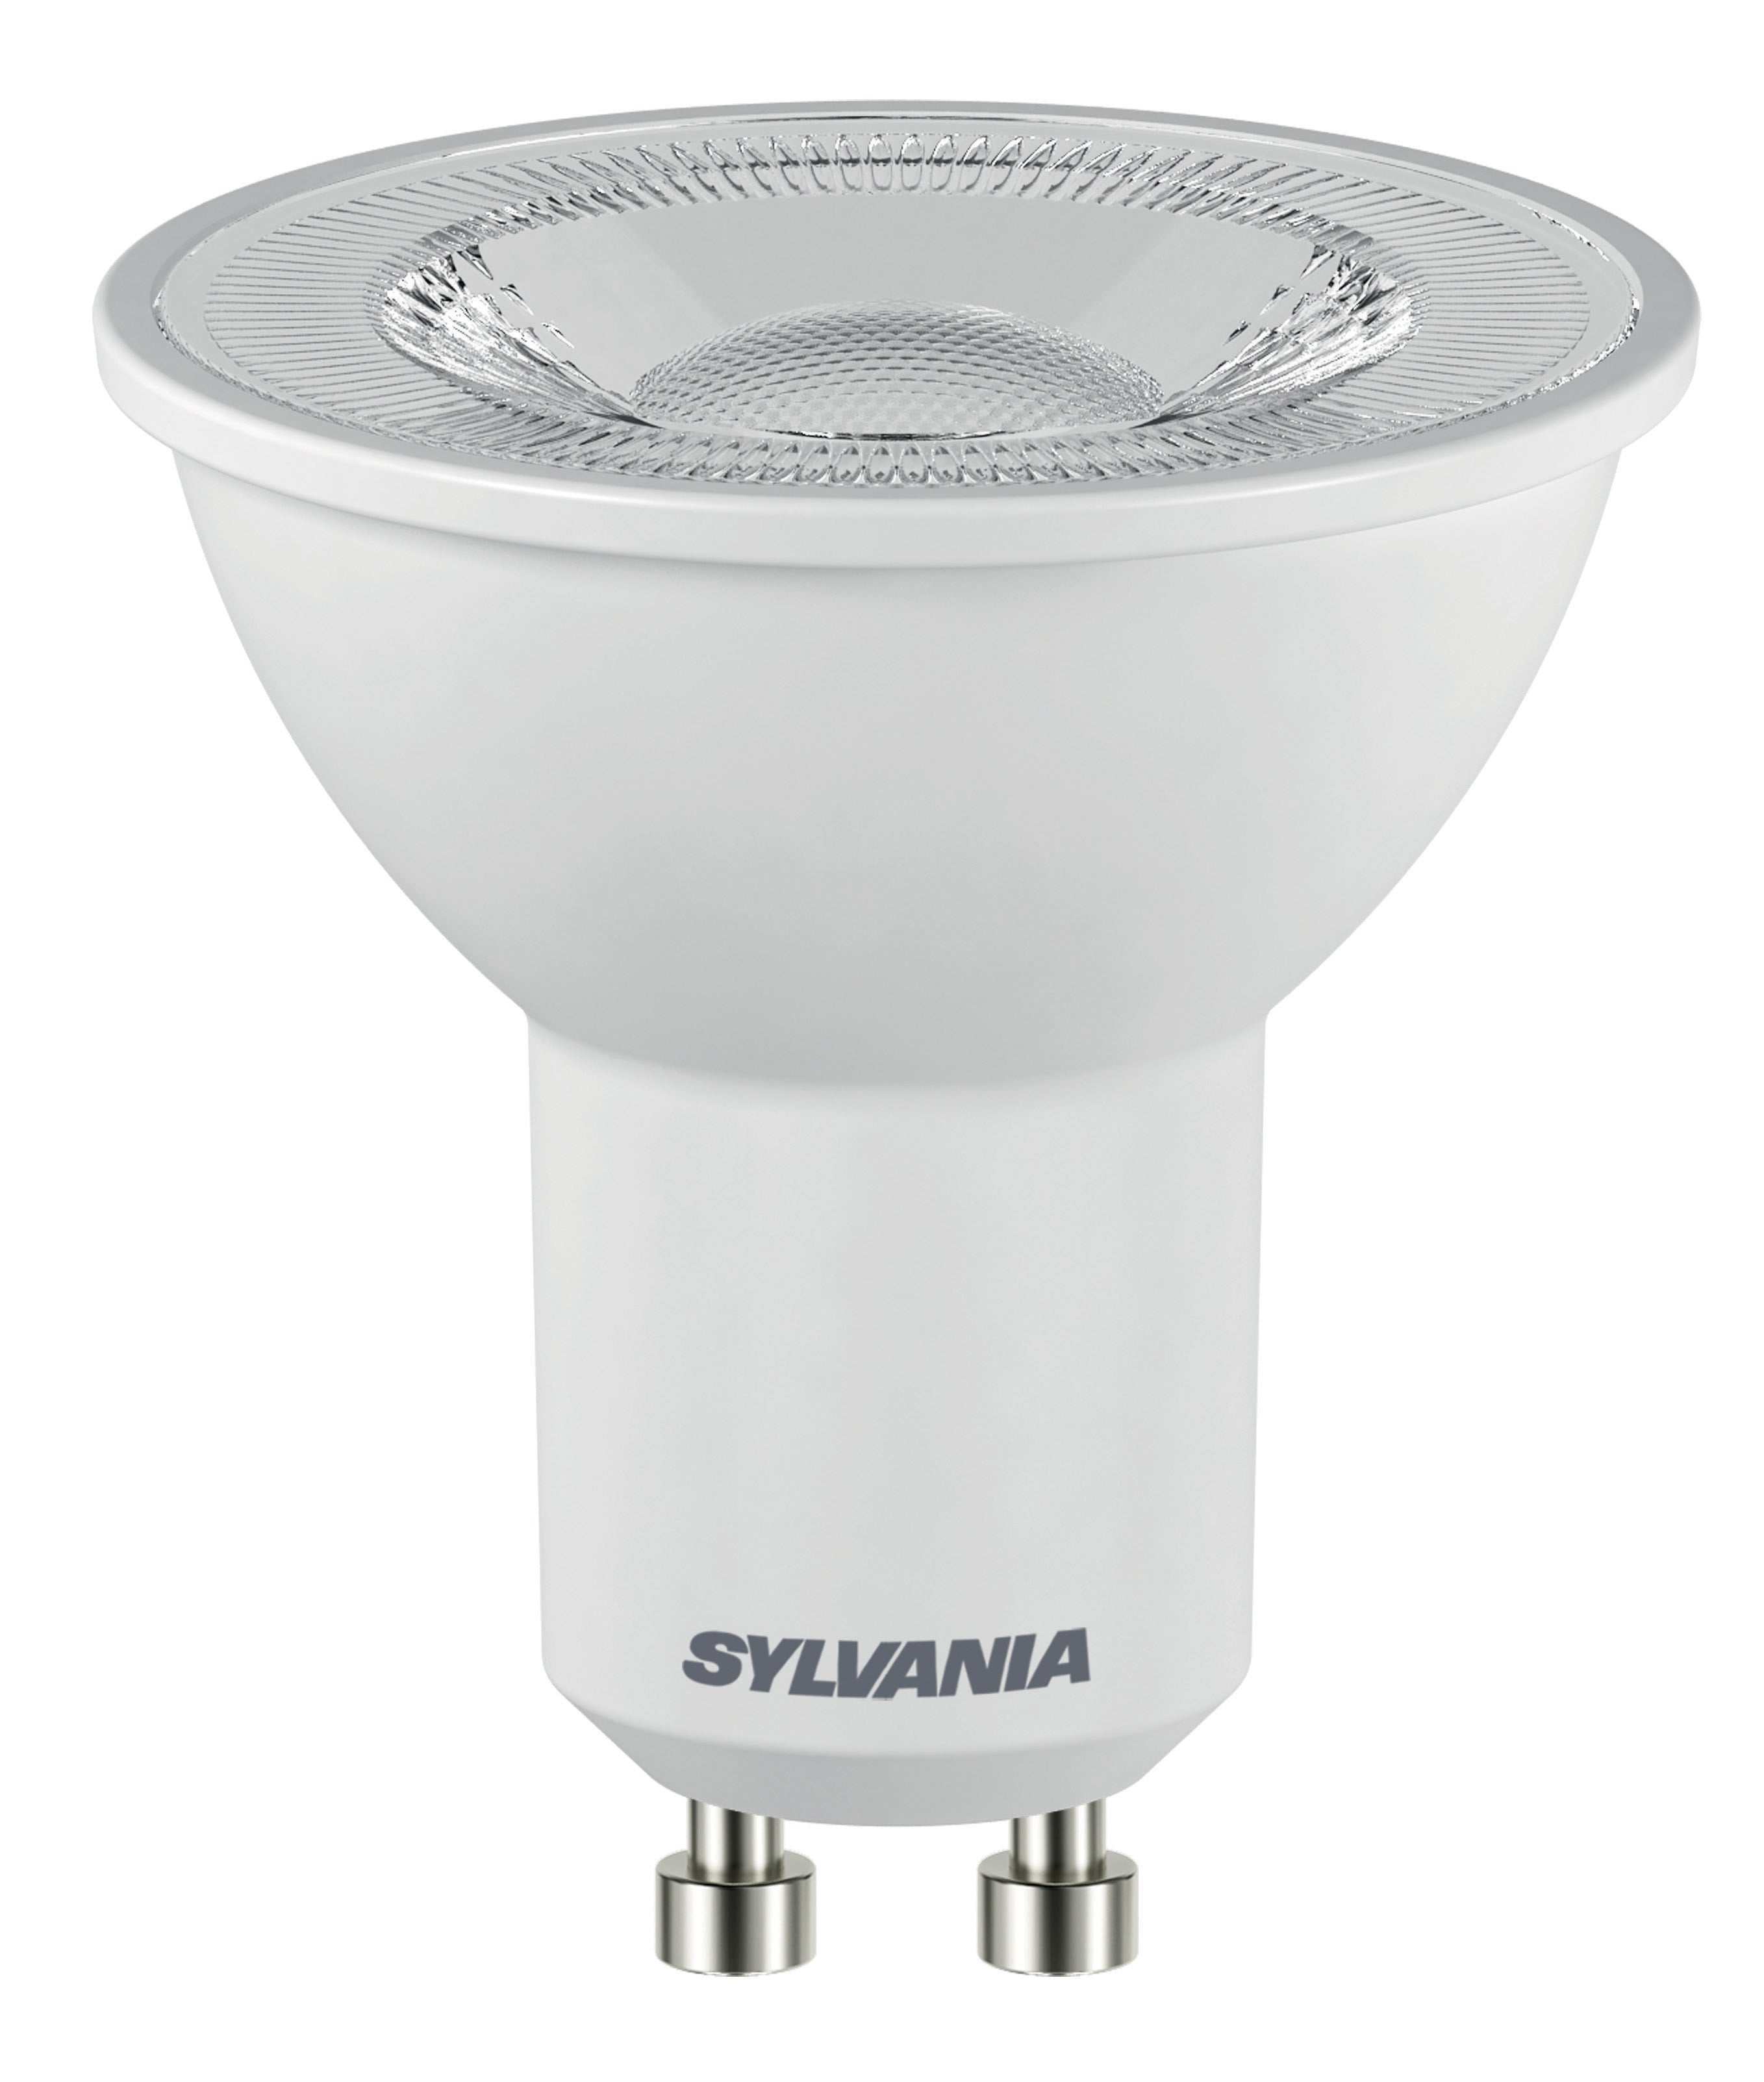 Sylvania 4.2W GU10 Lamp RefLED ES50 V6 345LM Warm White 36 degree - 0029160